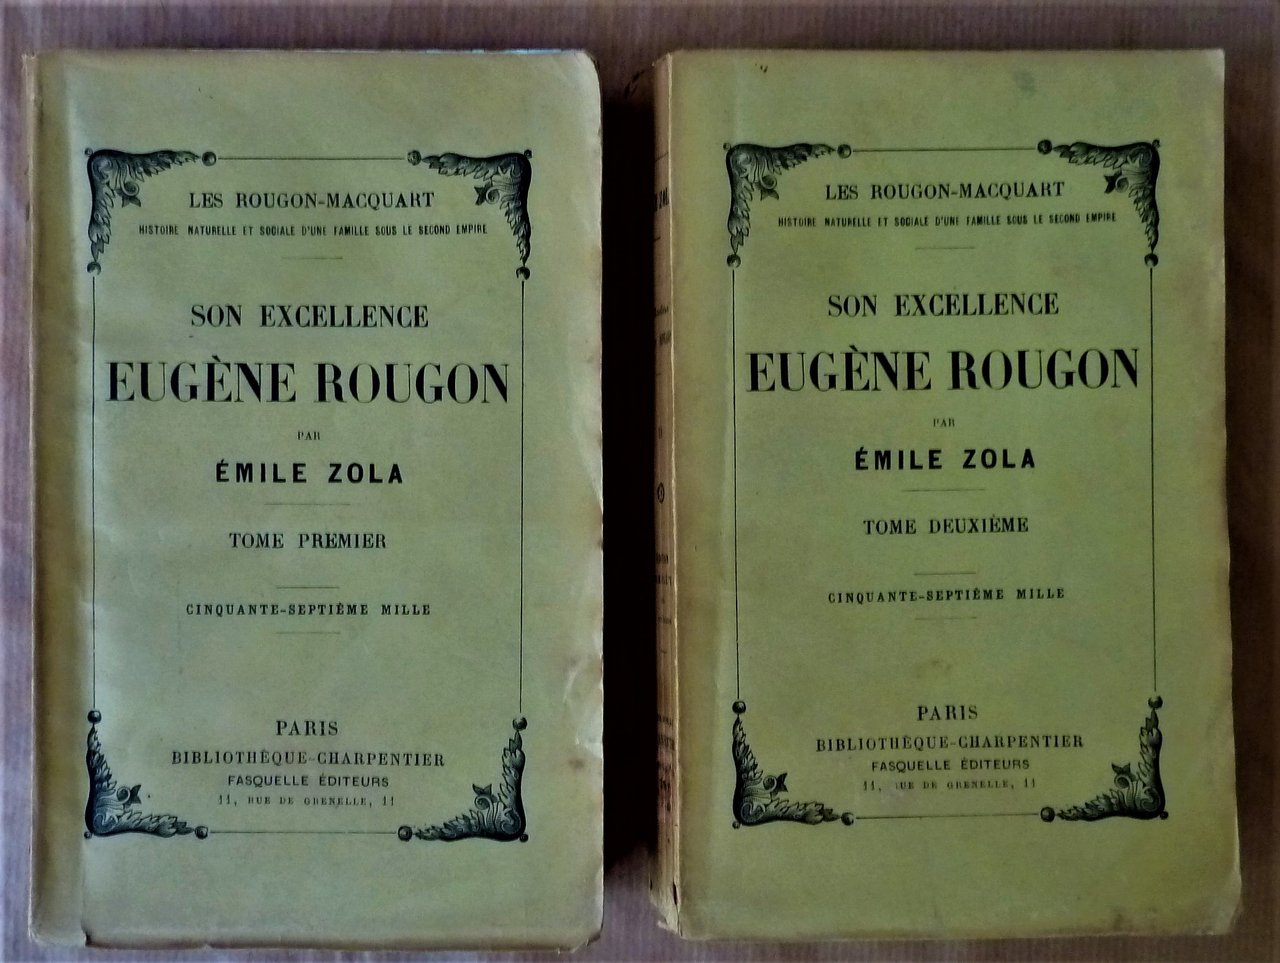 Son Excellence Eugène Rougon.